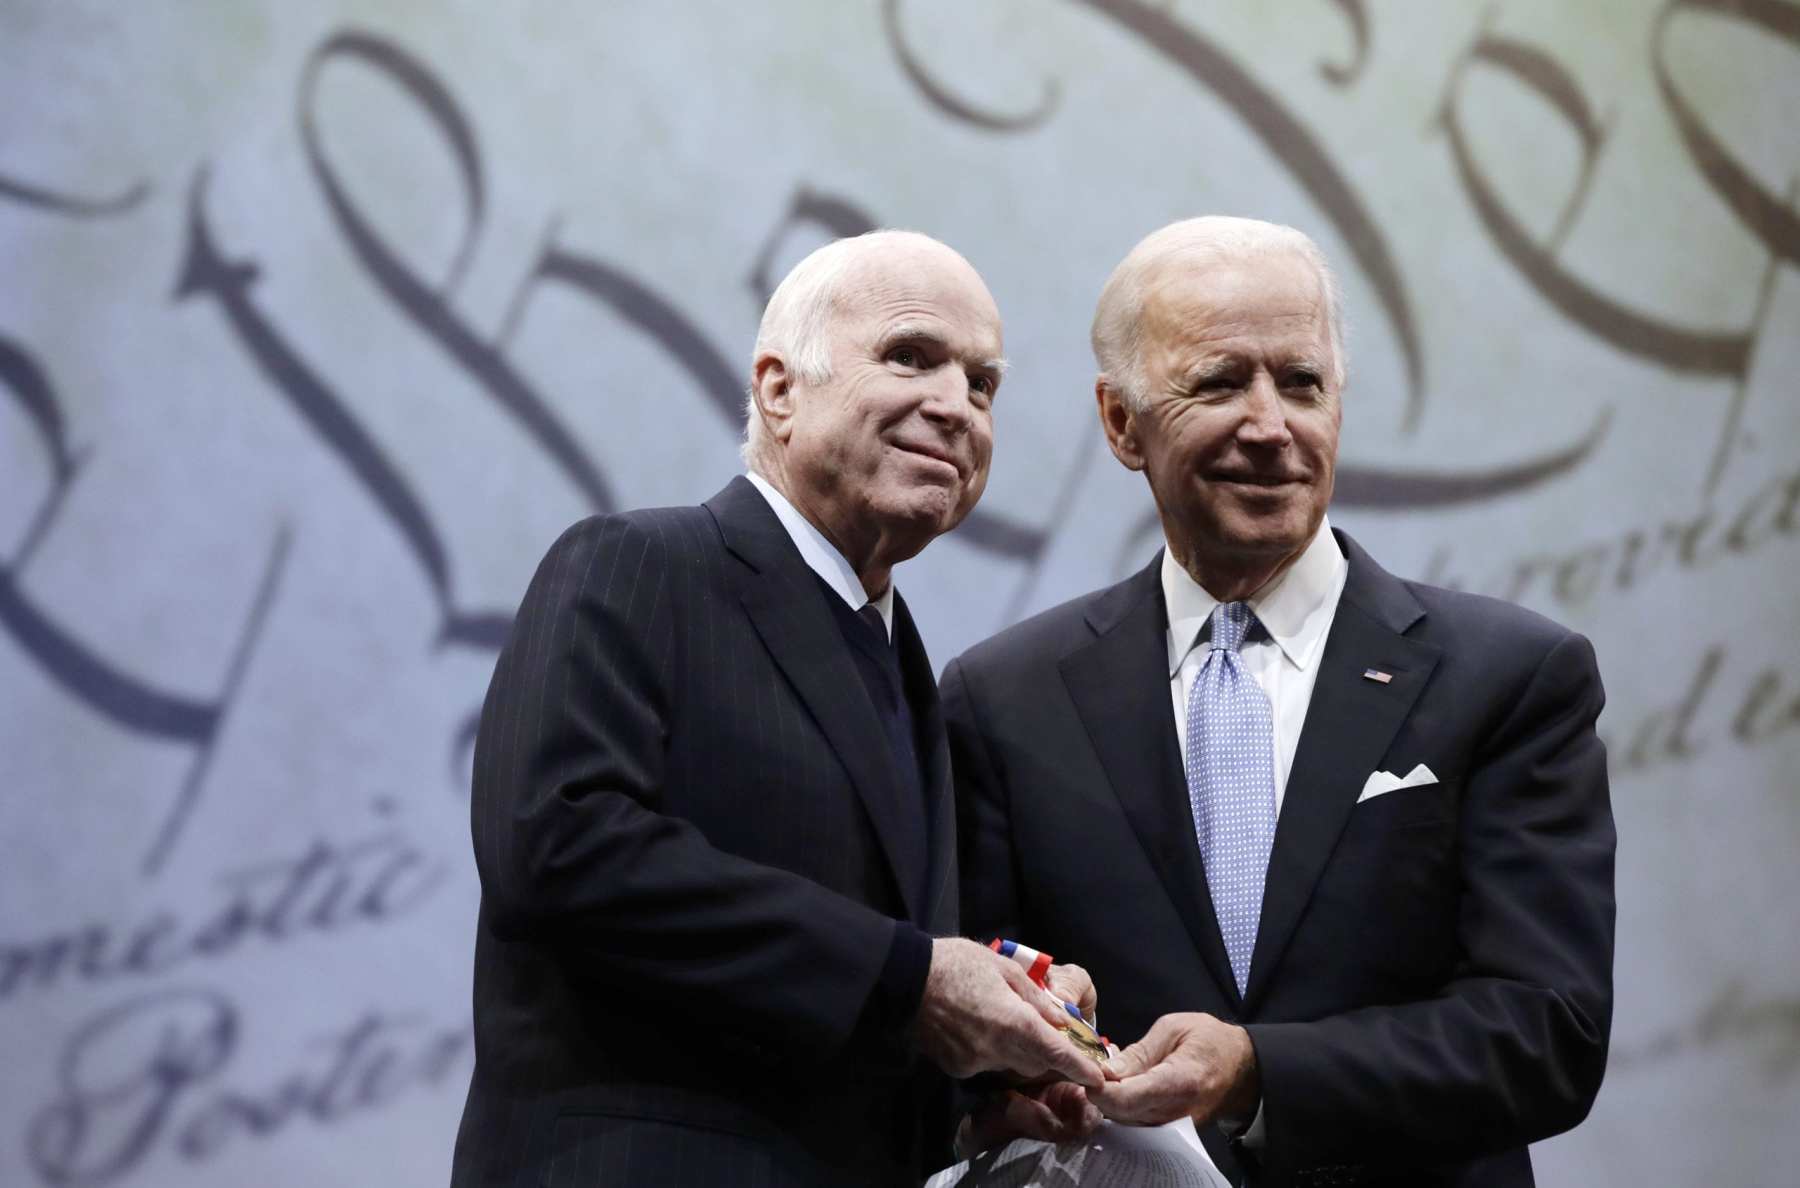 Sen. John McCain and Joe Biden together on stage.